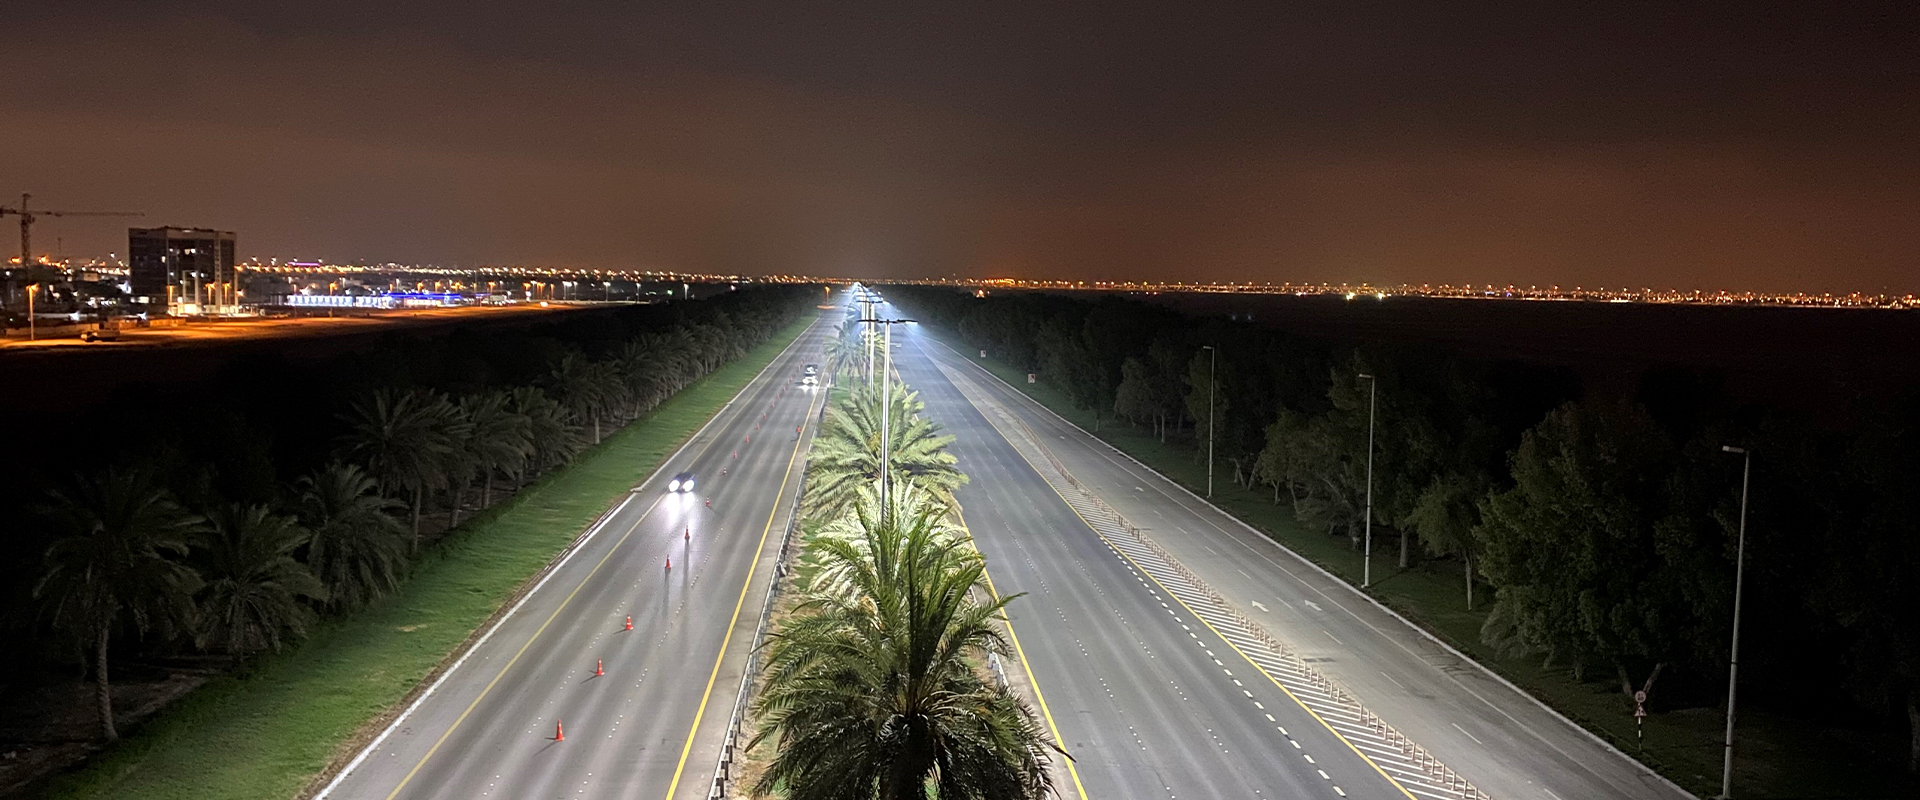 Abu Dhabi LED street lighting